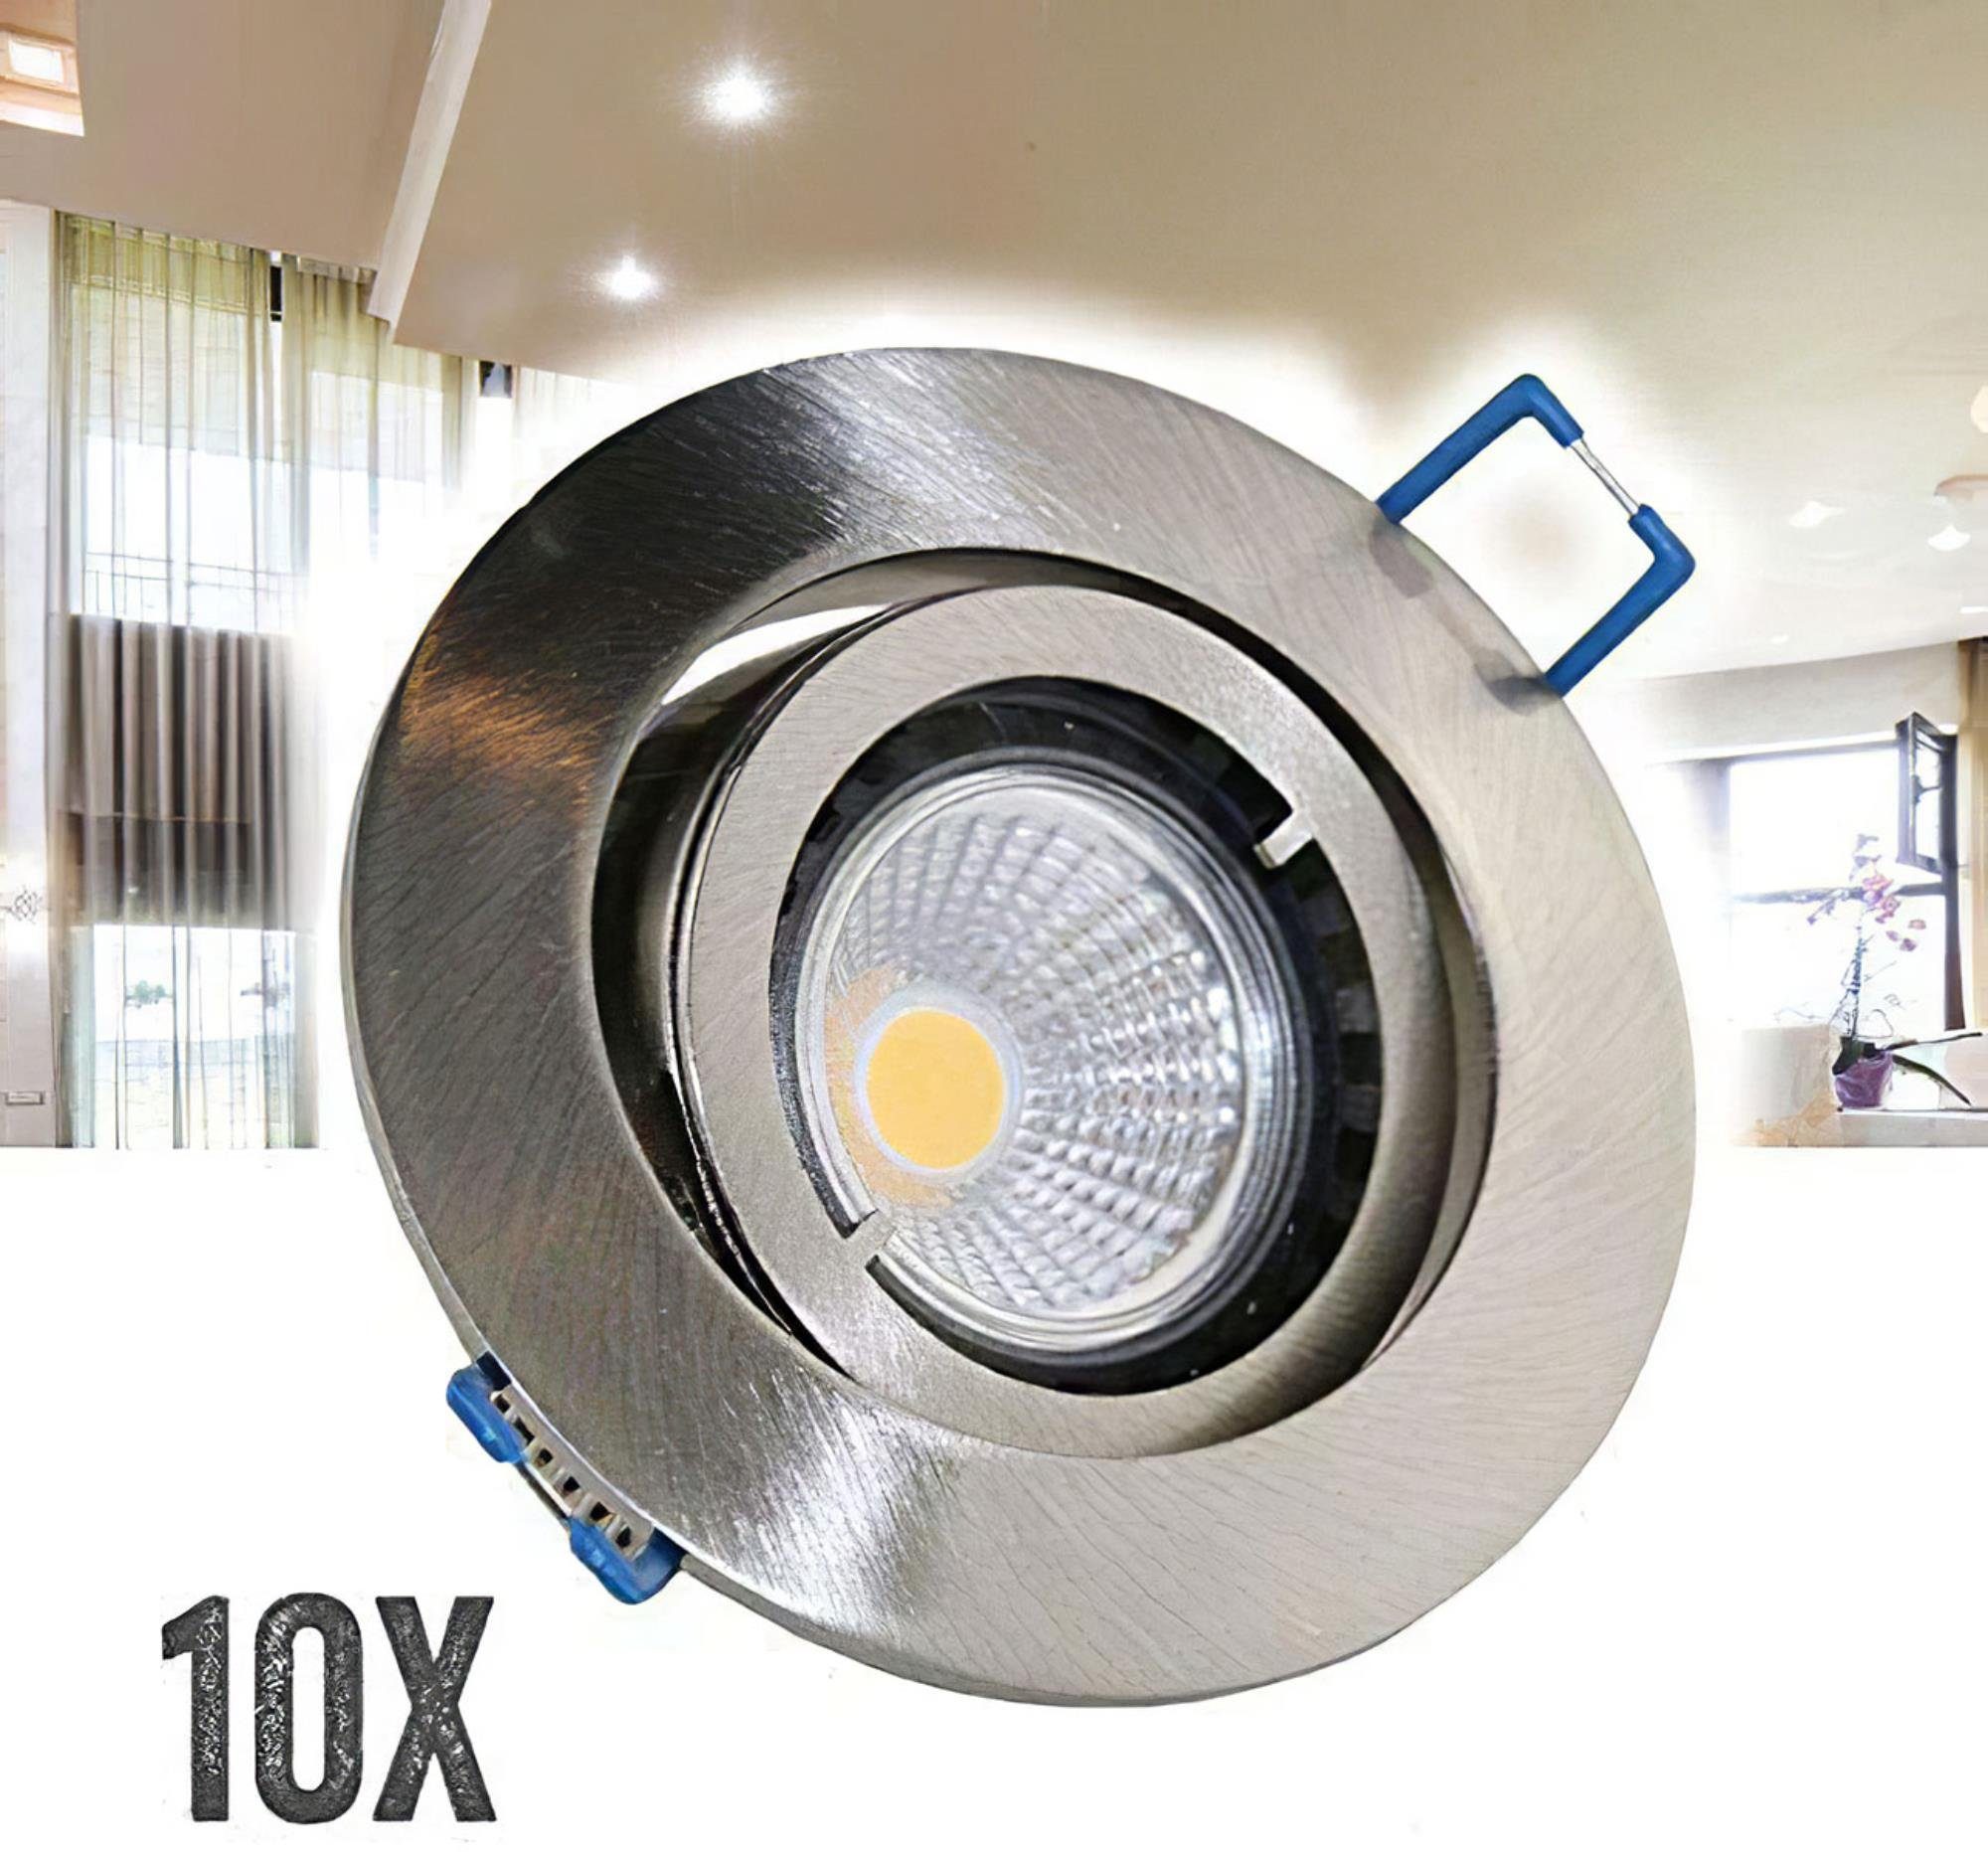 VBLED LED mit rund Einbaustrahler warmweiß LED wechselbar, Set LED gebürstet 10er Leuchtmittel, Einbaustrahler